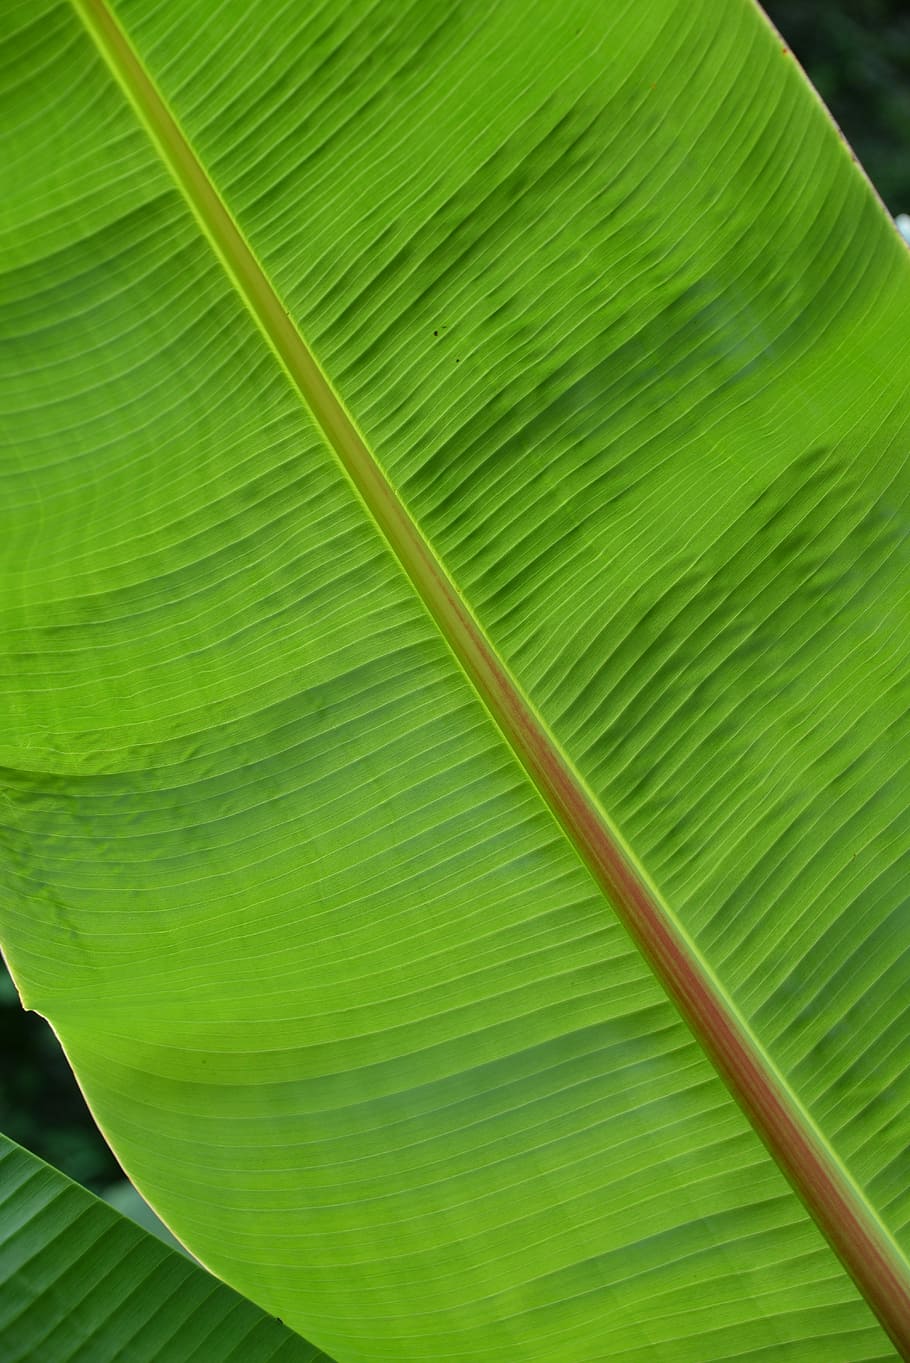 Leaf, Structure, Plant, Palm, green, palm leaf, light green, palm fronds, fern, fan palm